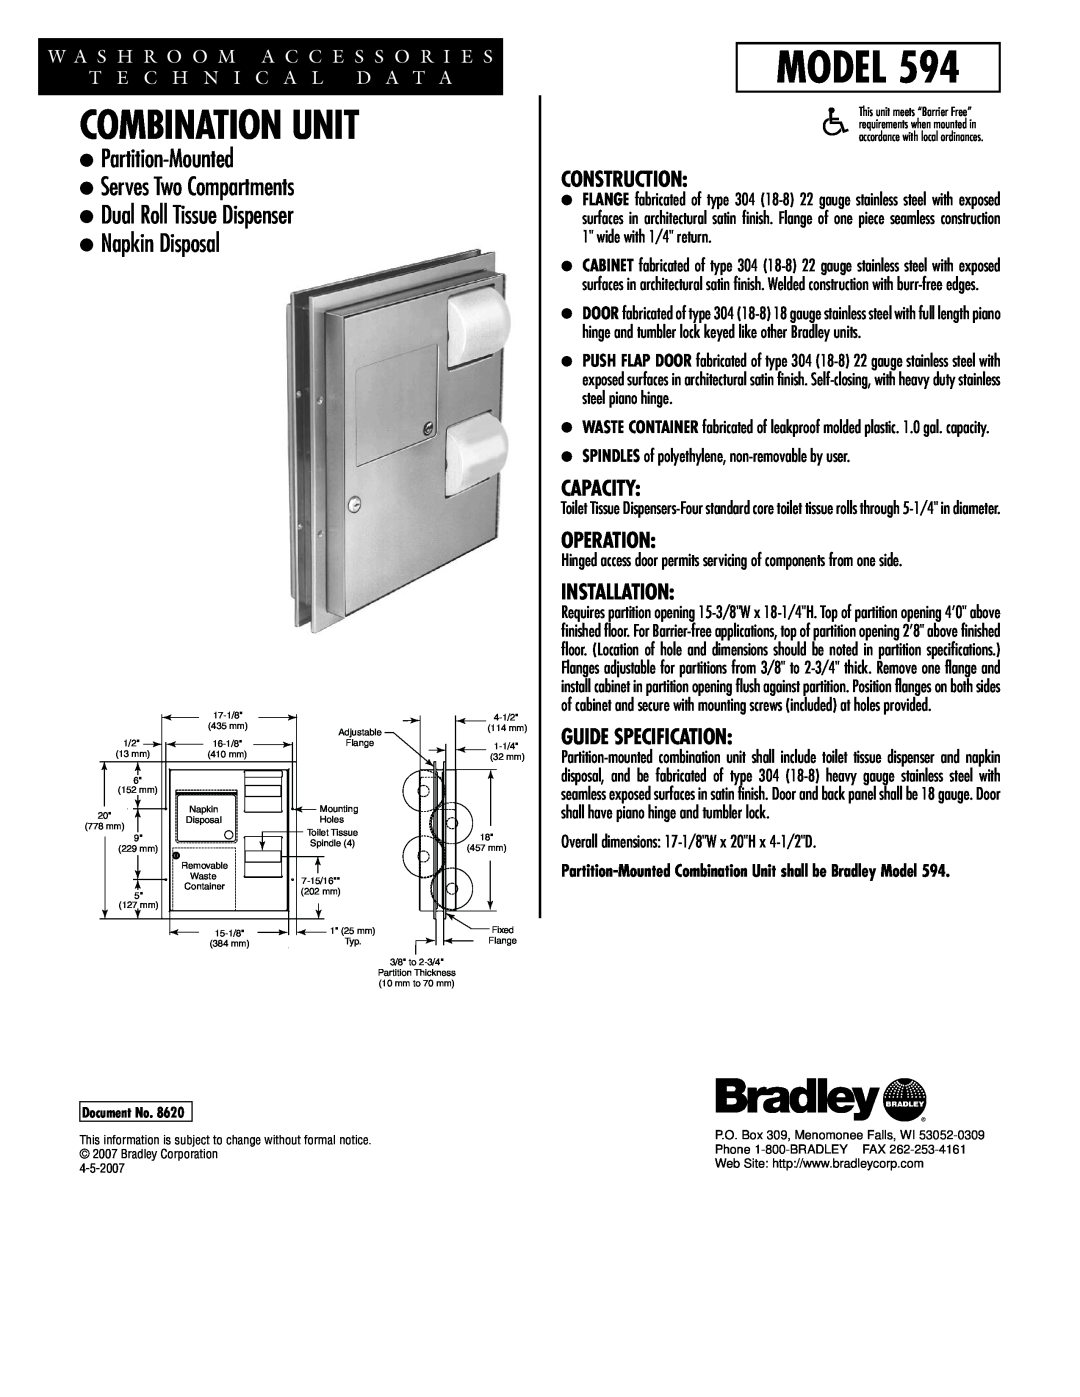 Bradley Smoker 594 dimensions Model, Combination Unit, Napkin Disposal, Construction, Capacity, Operation, Installation 